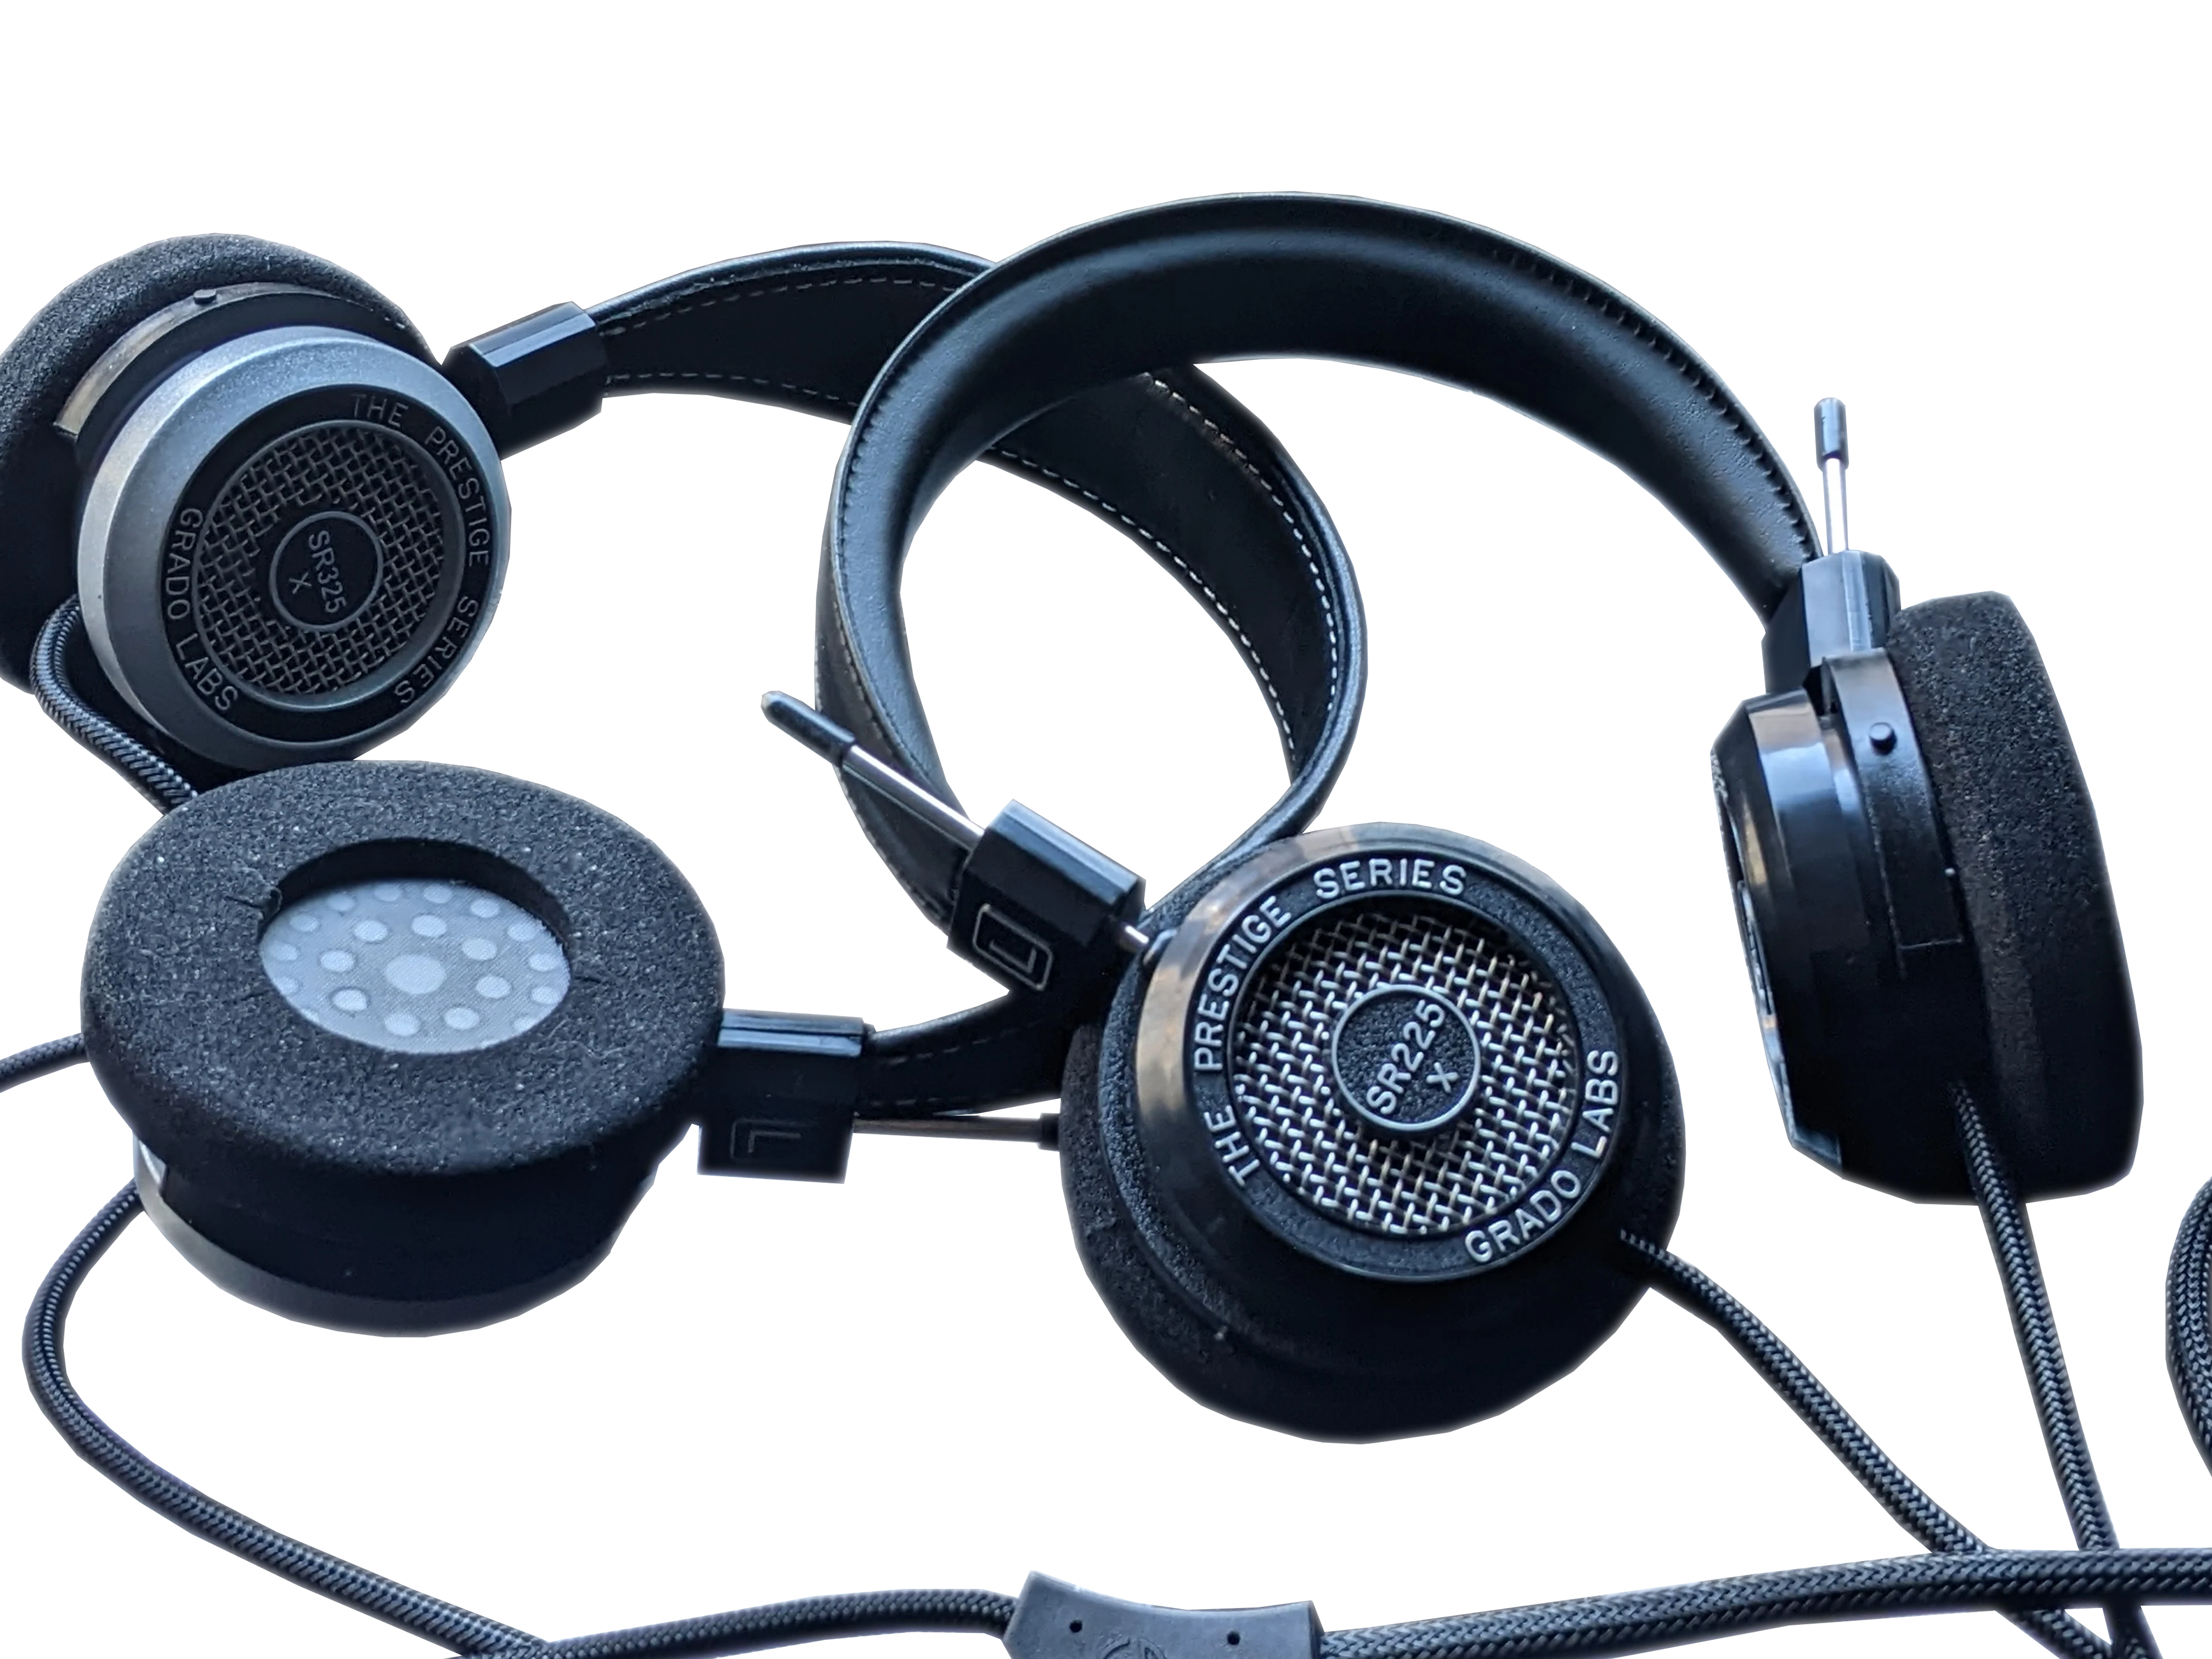 Grado SR325x vs. SR225x Headphone Comparison Review